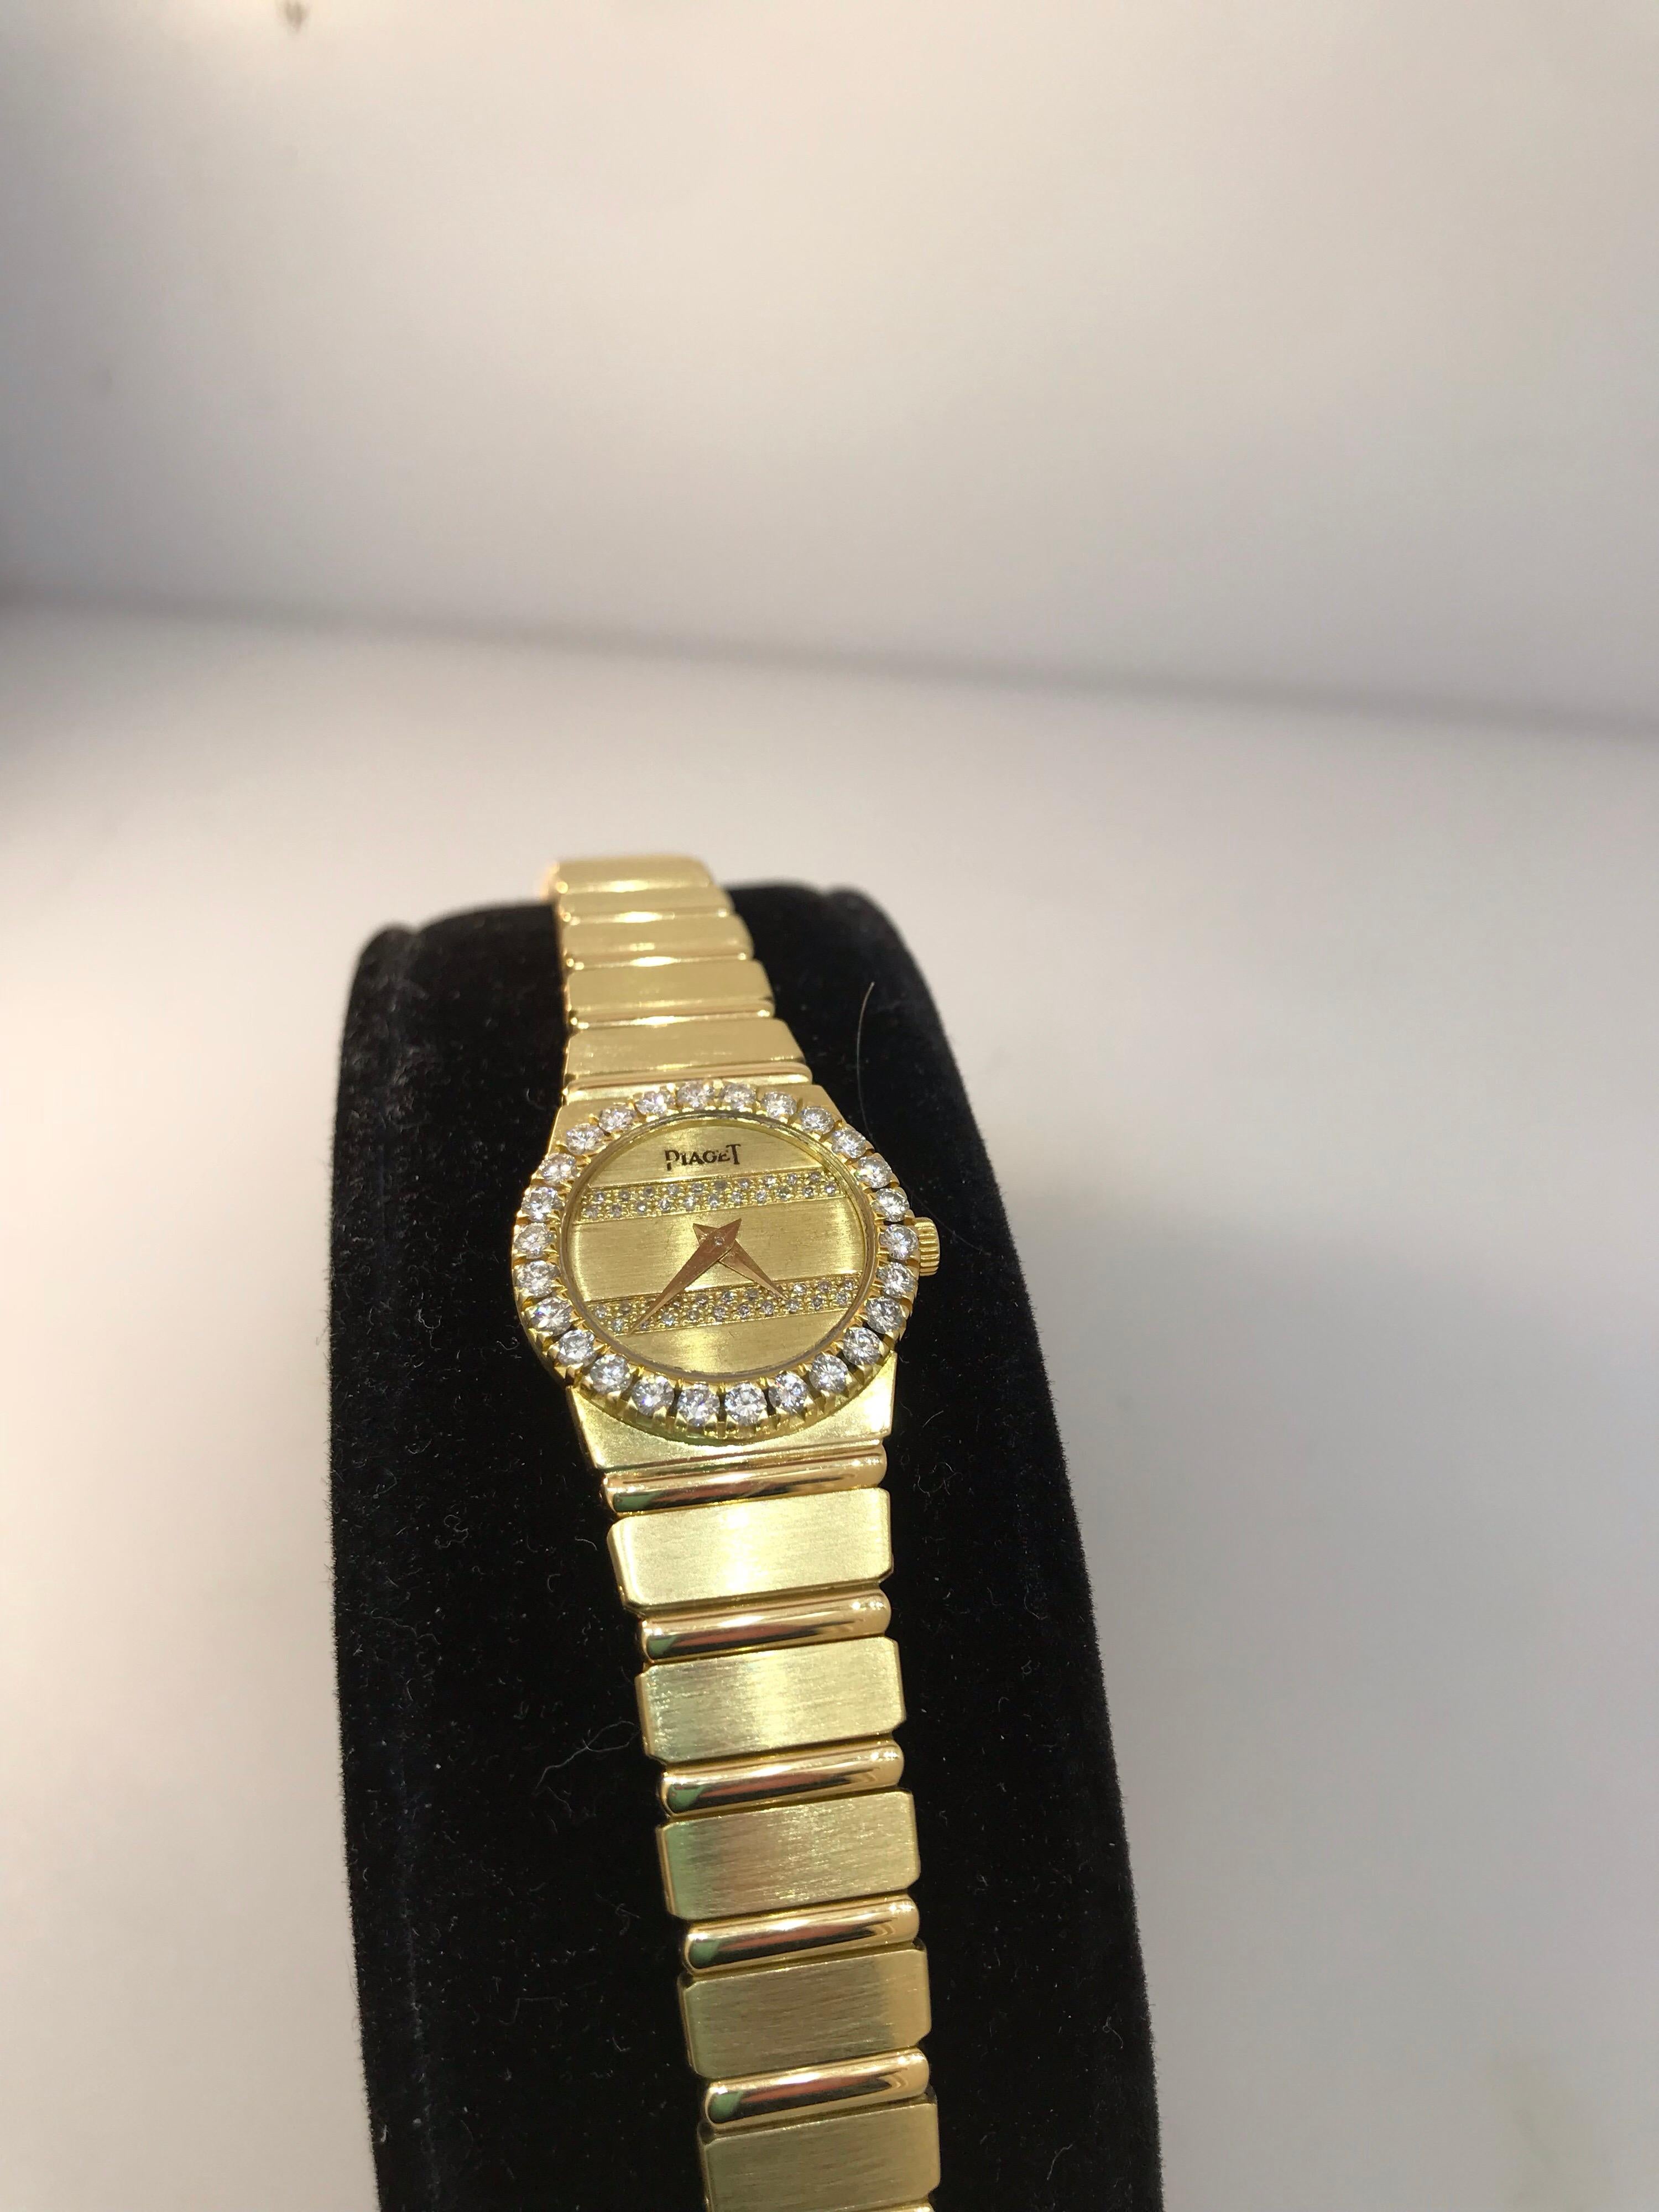 Piaget Polo 18 Karat Gold Diamond Bezel and Dial Ladies Bracelet Watch 8296 For Sale 2